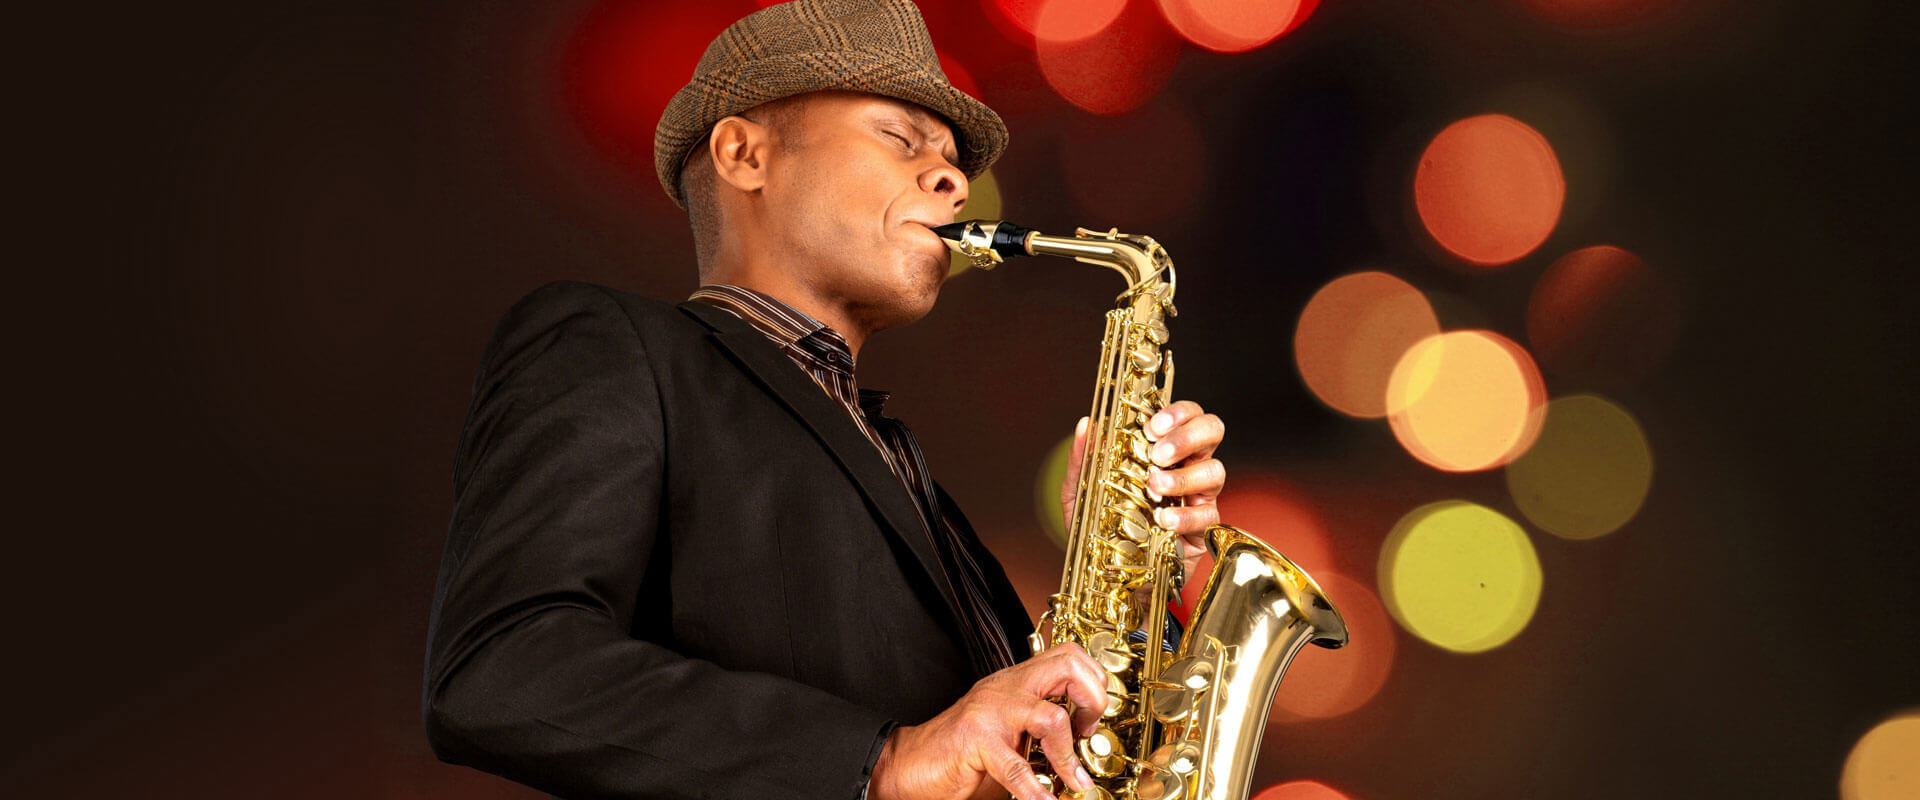 Saxophone Lessons Newark, CA